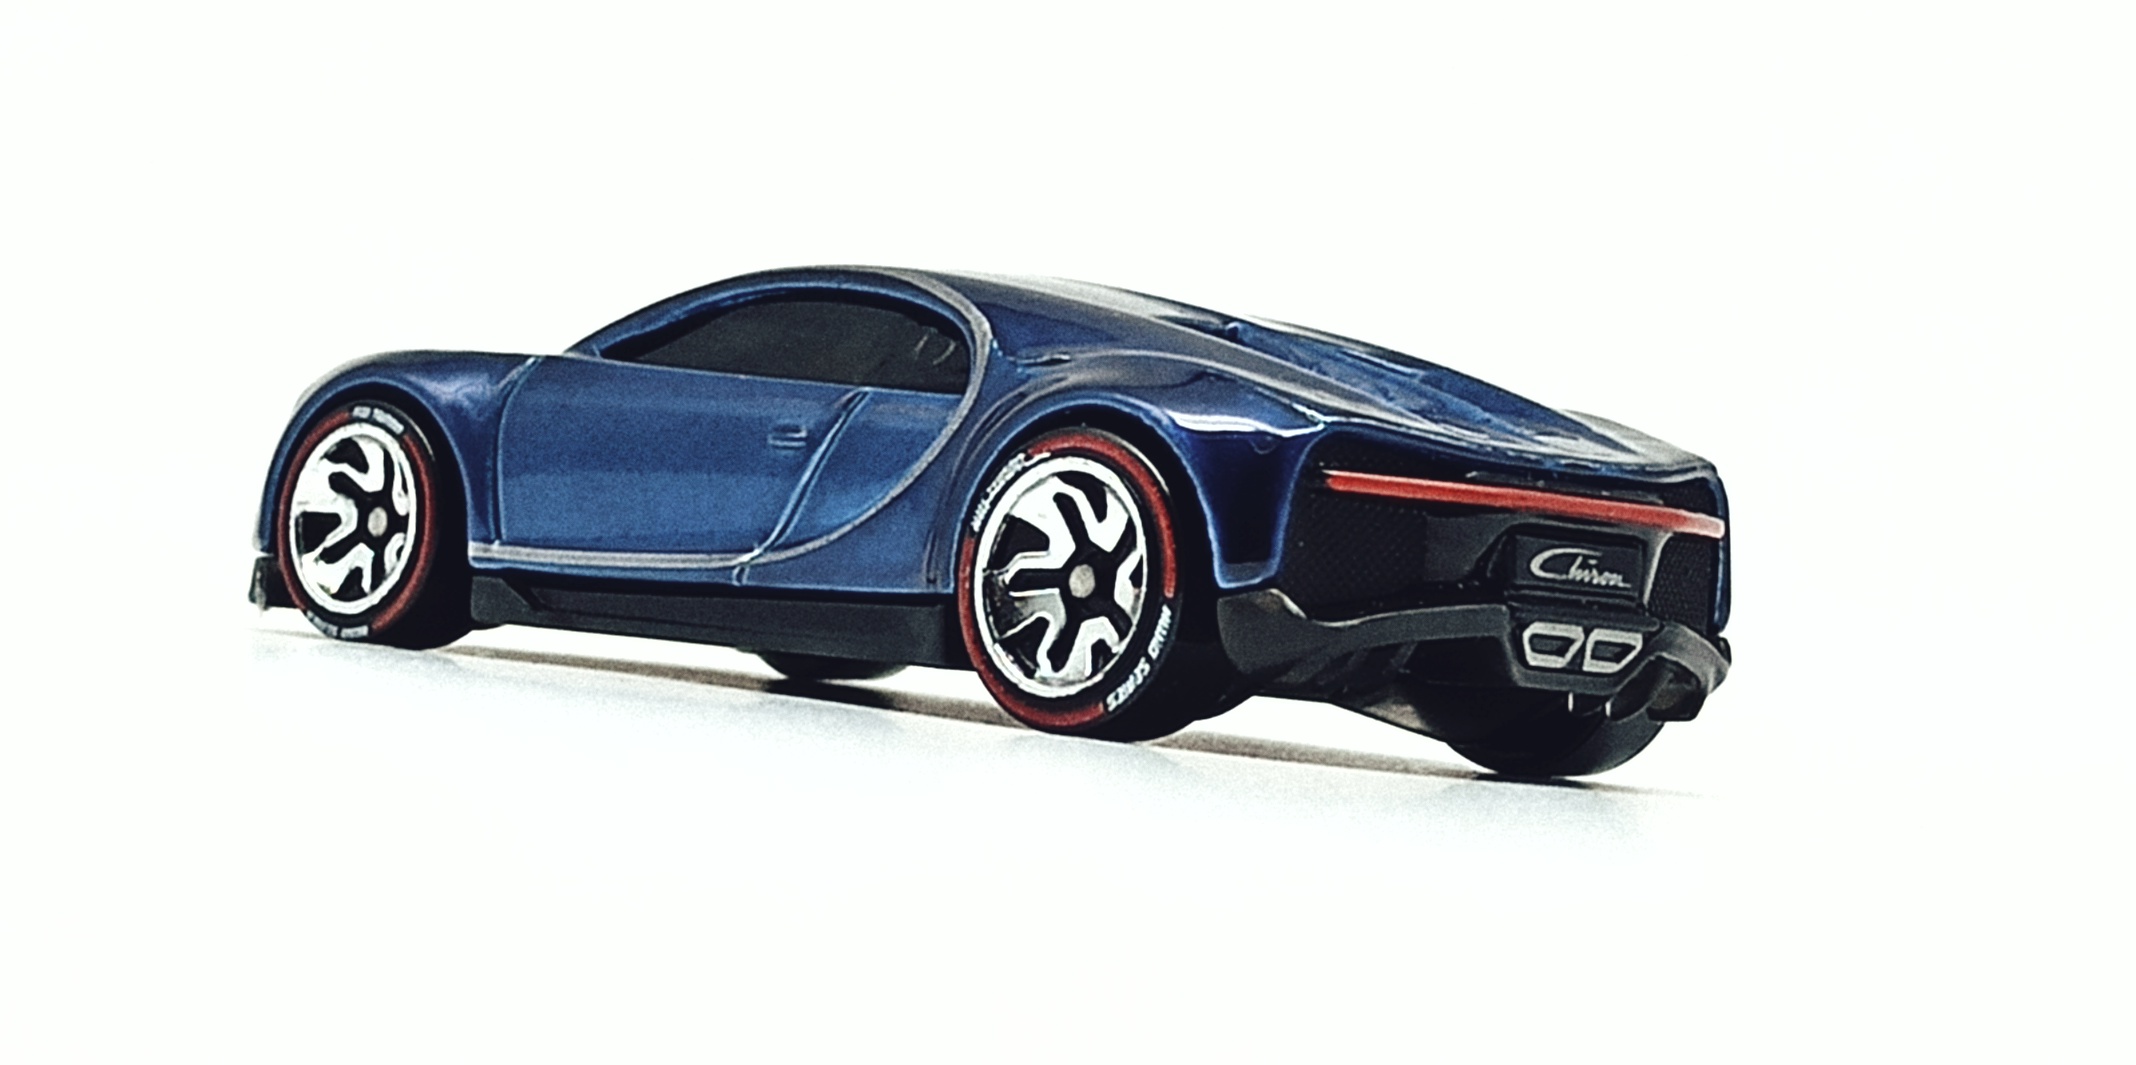 Hot Wheels id '16 Bugatti Chiron (HBG00) 2021 HW Turbo (3/4) spectraflame blue side angle